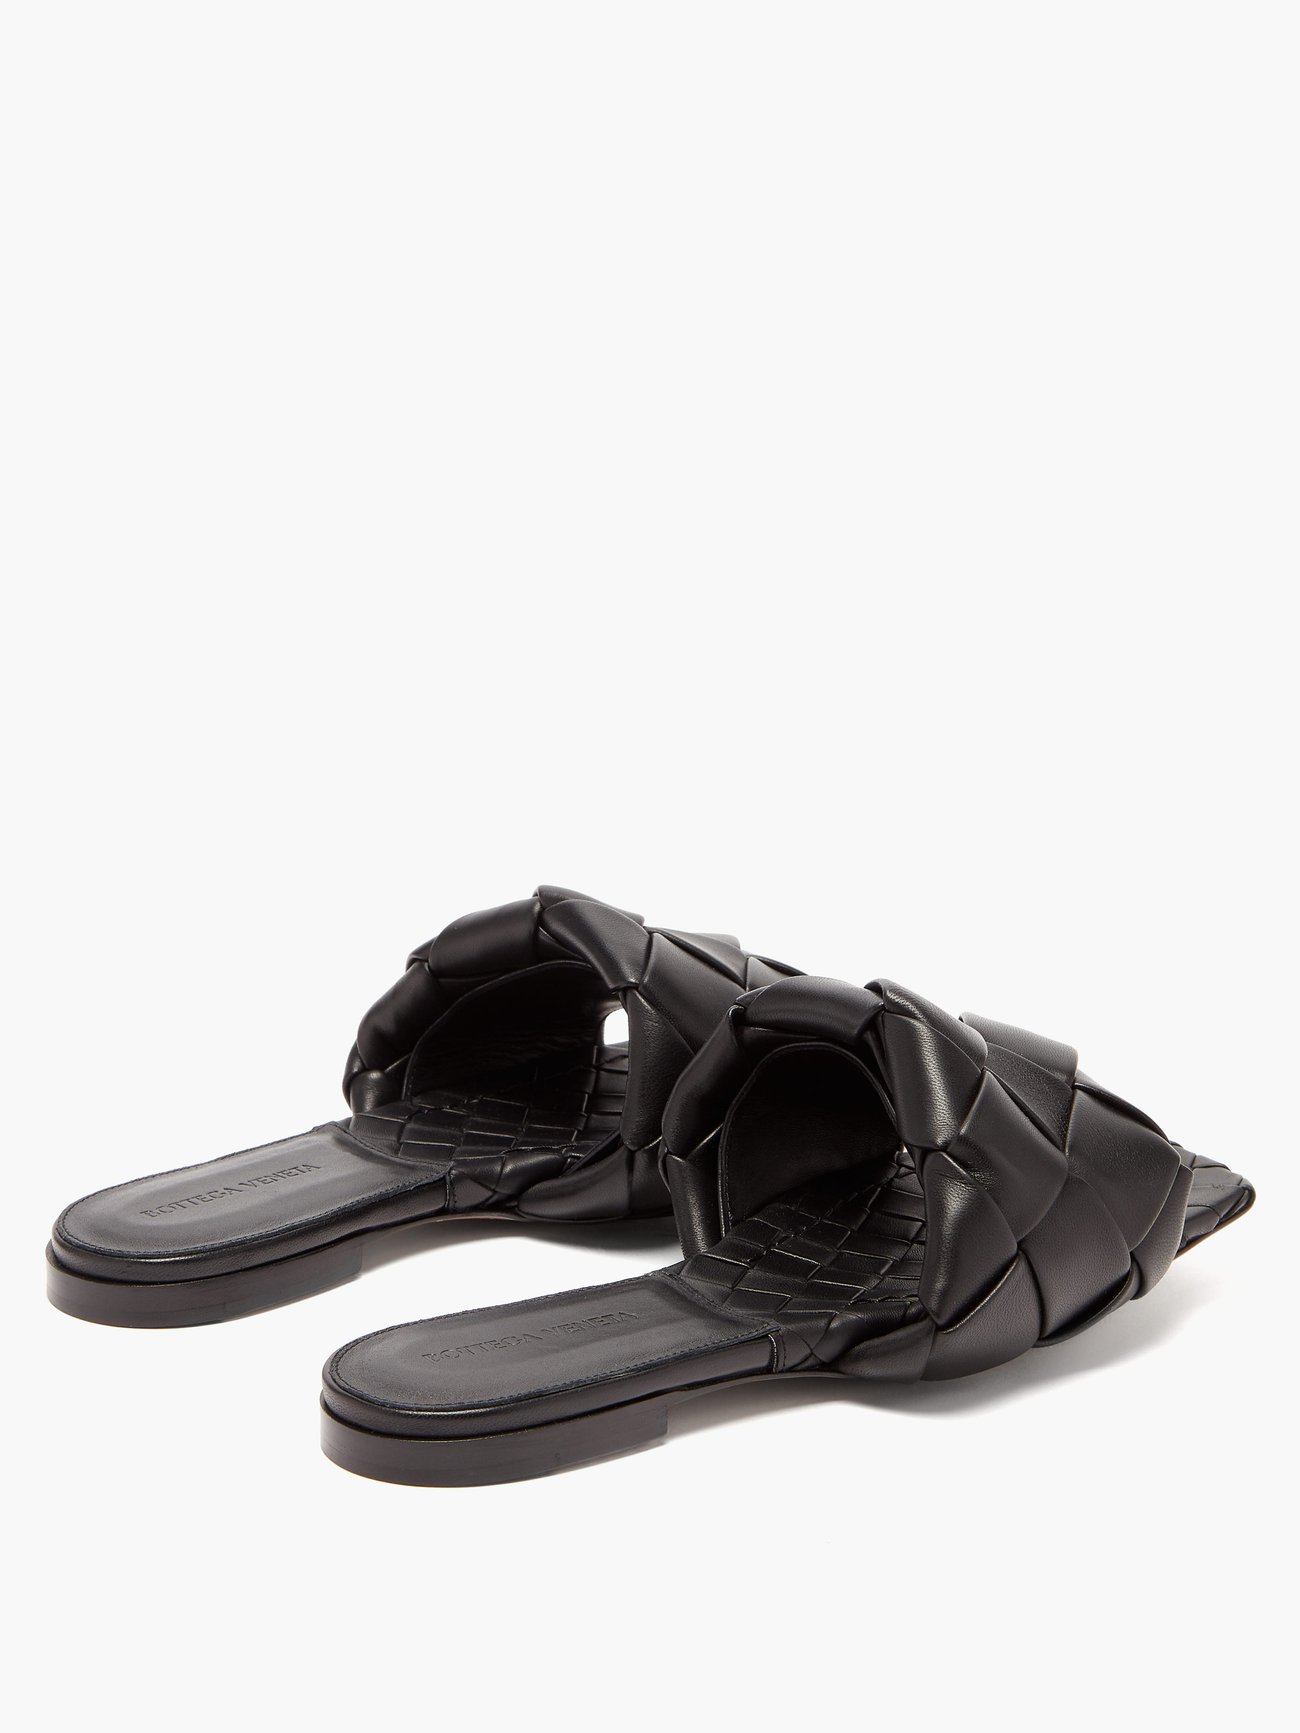 Lido Leather Sandals in Black - Bottega Veneta